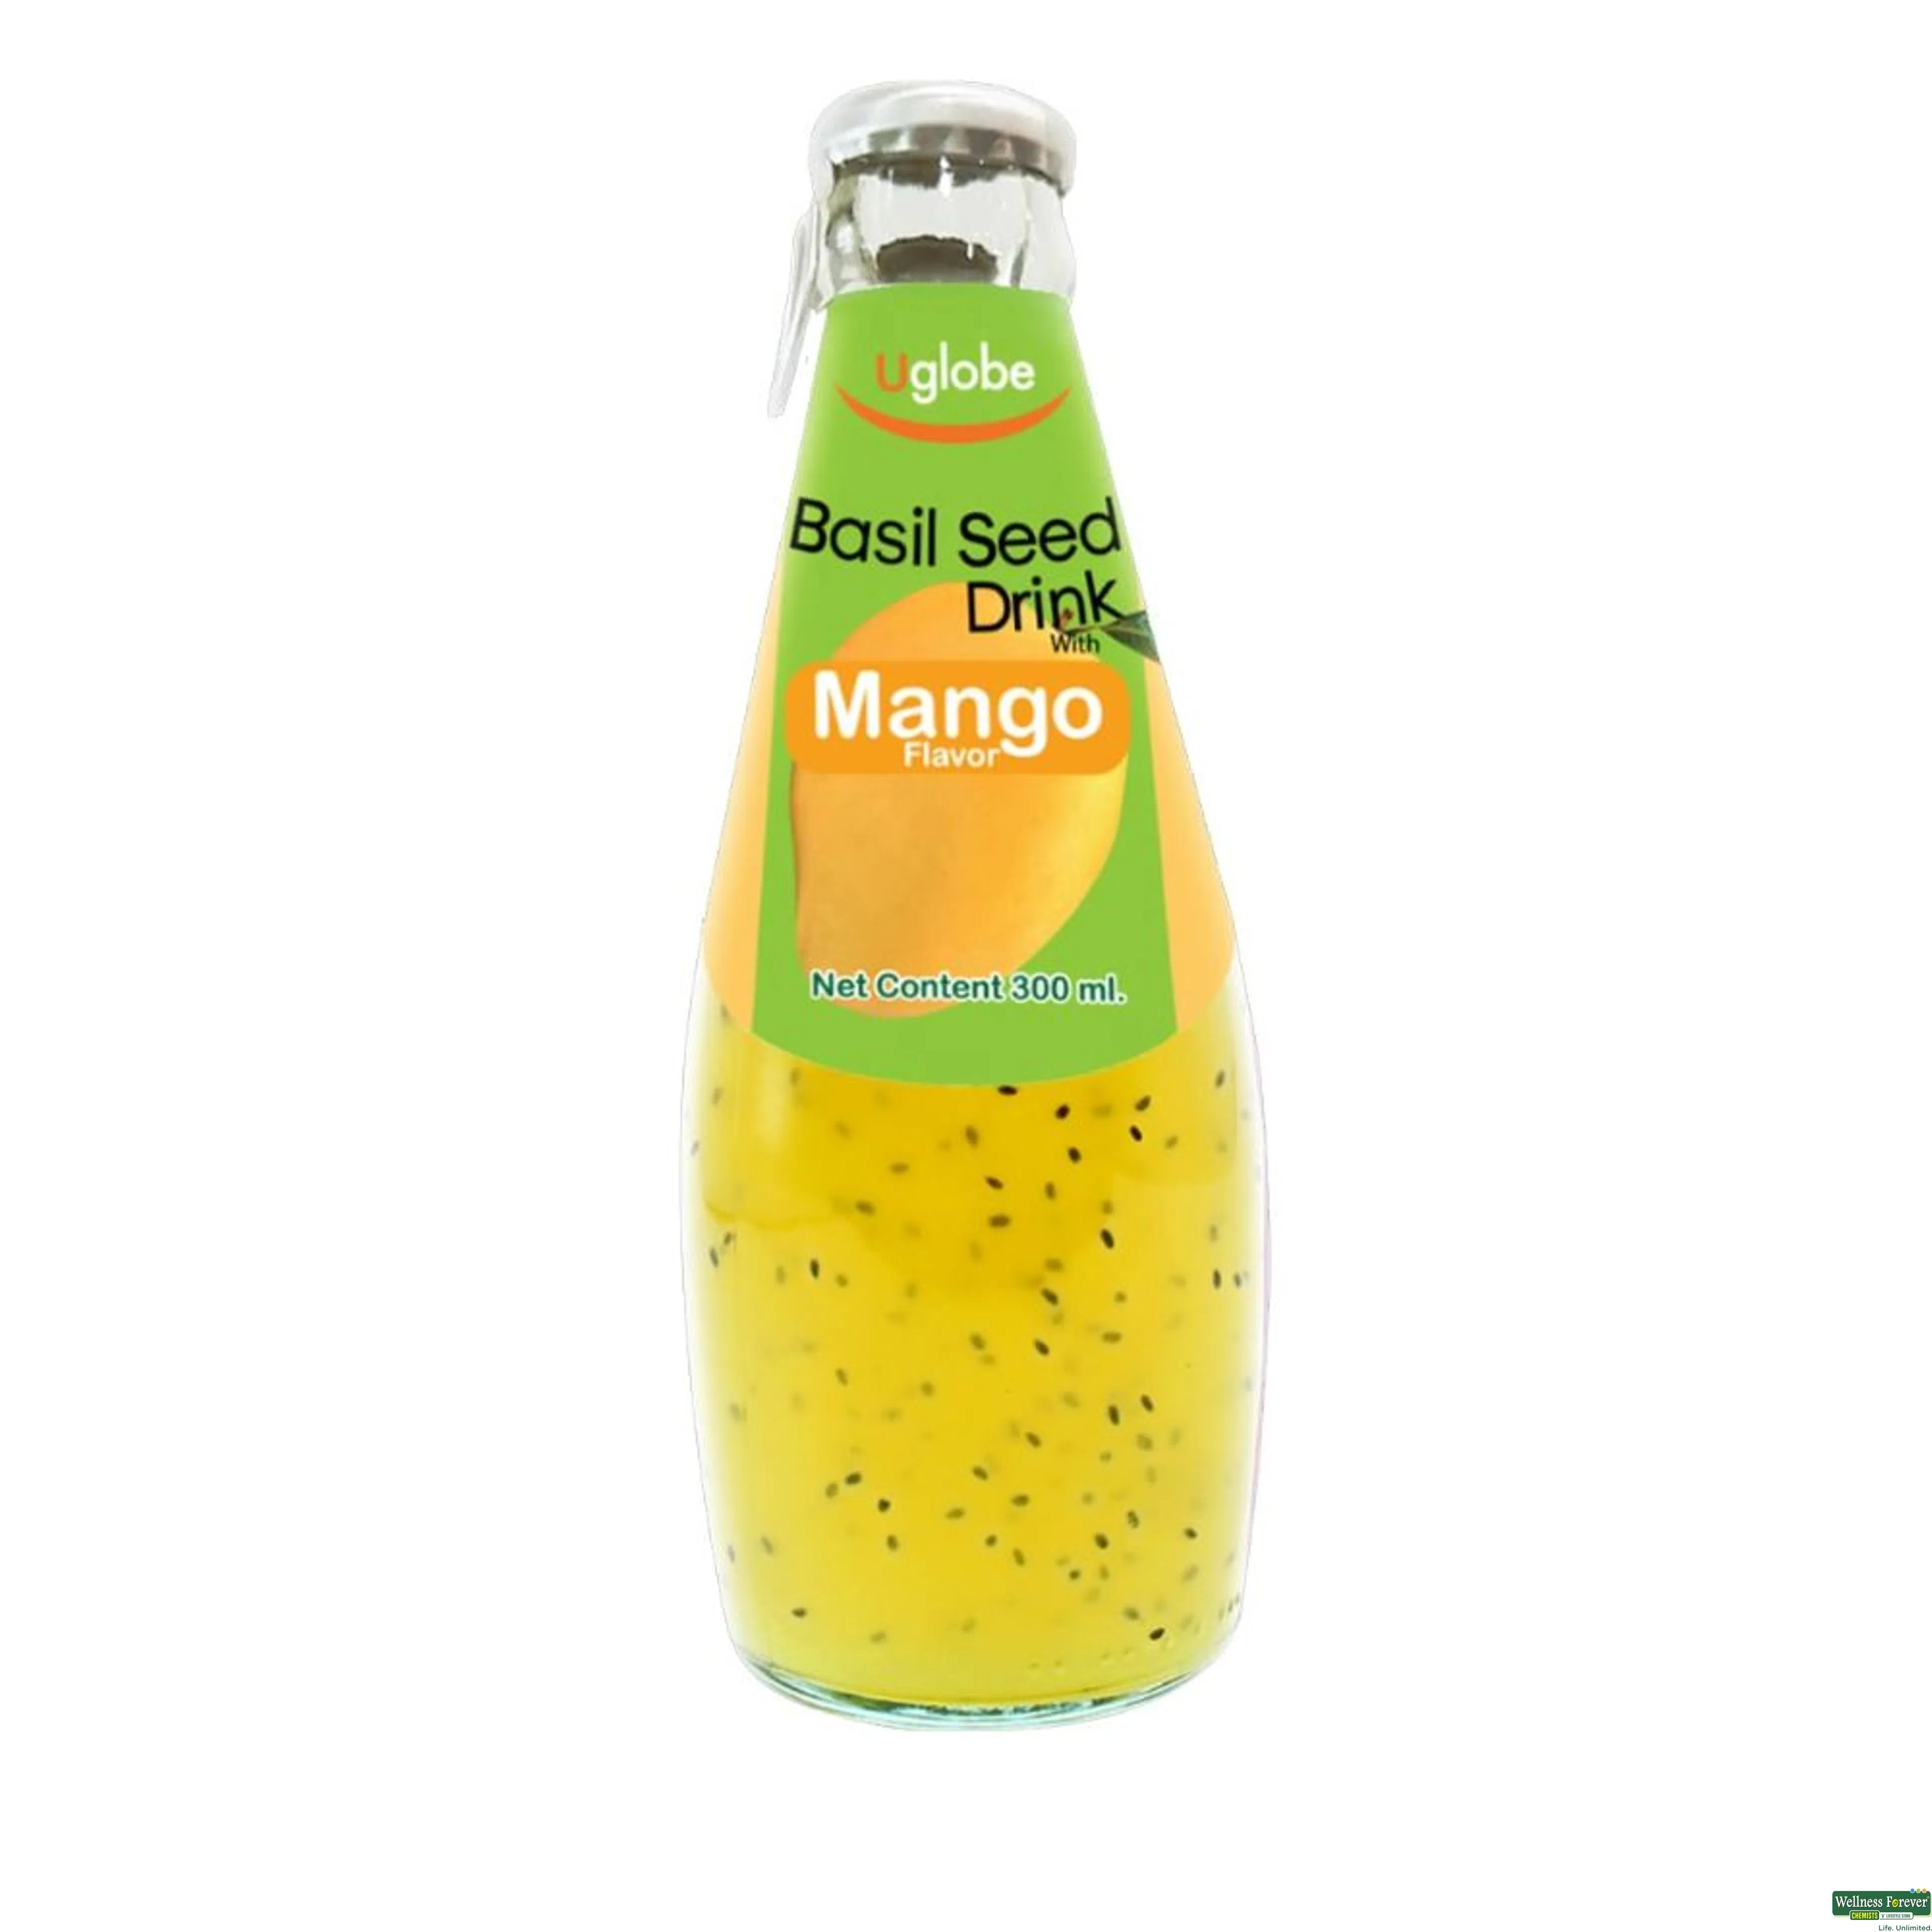 U GLOBE BASIL SEED DRINK MANGO 300ML-image